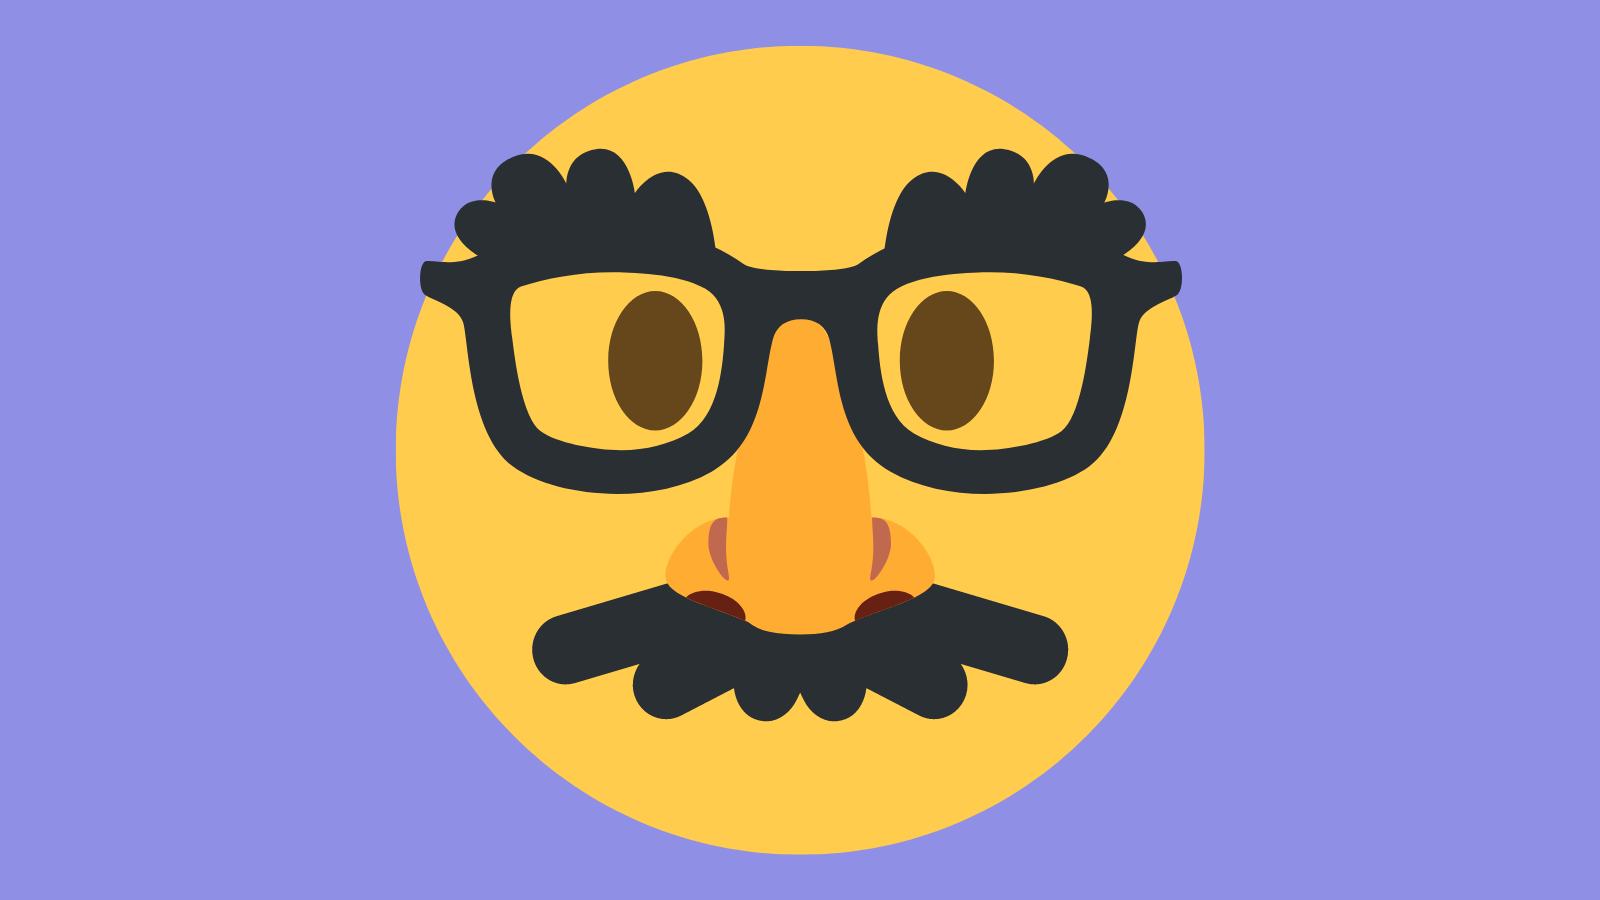 The Groucho Marx glasses emoji